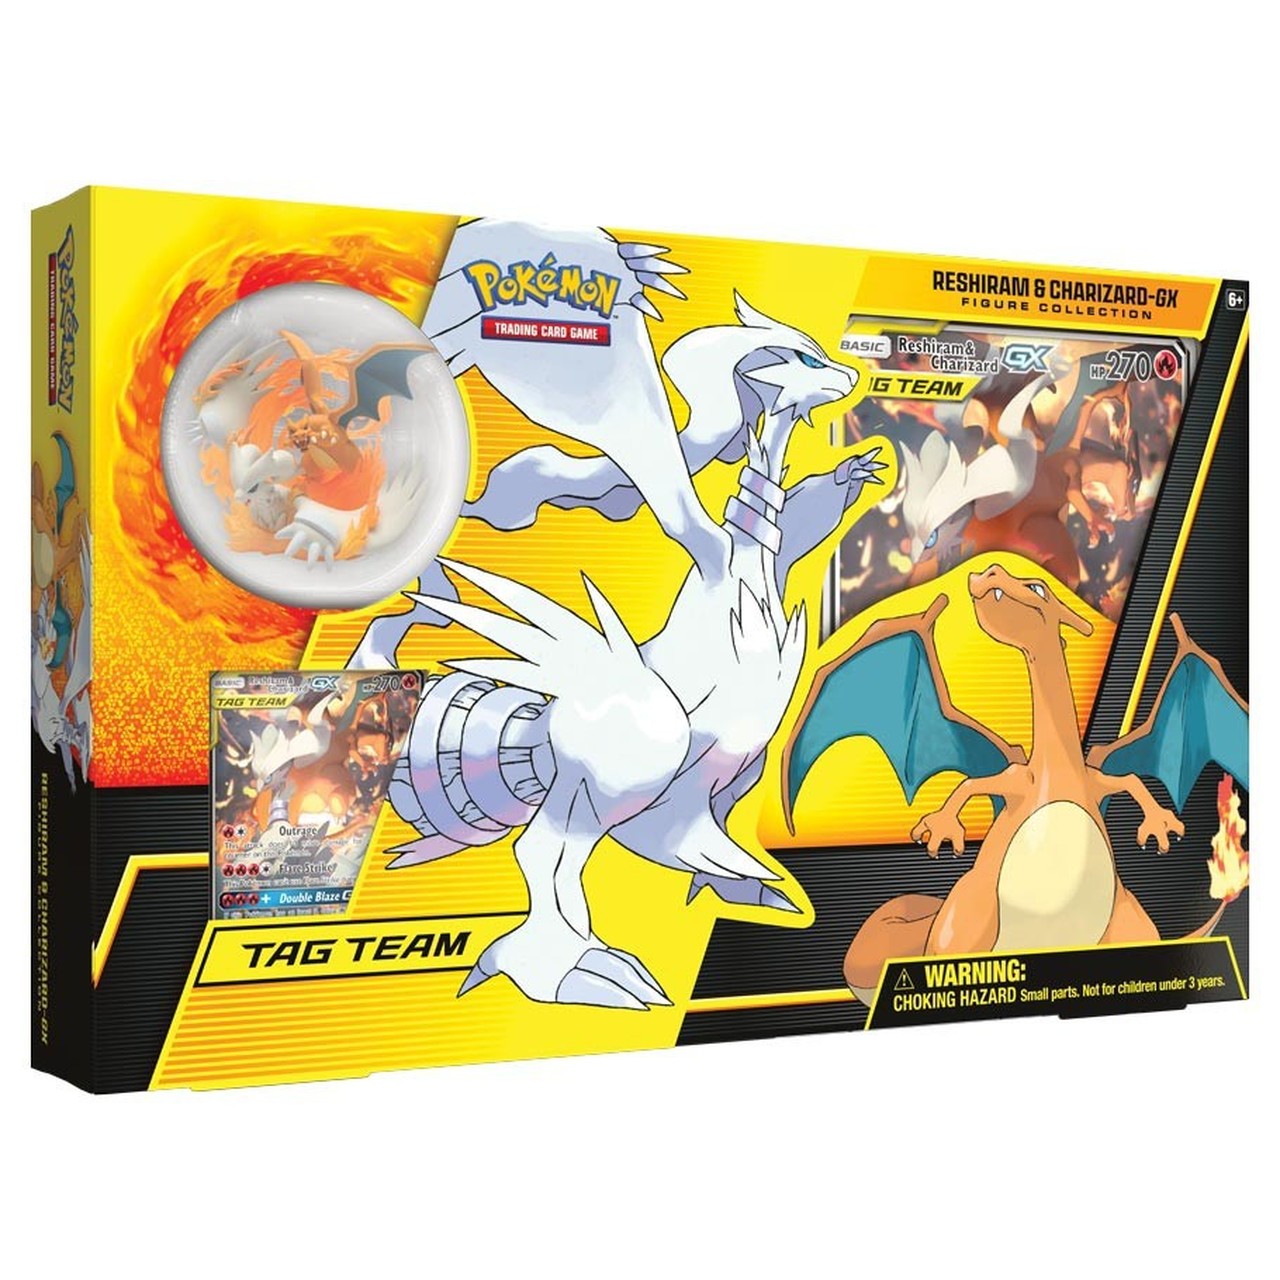 Pokémon TCG Reshiram & Charizard-GX Figure Collection Box - BigBoi Cards